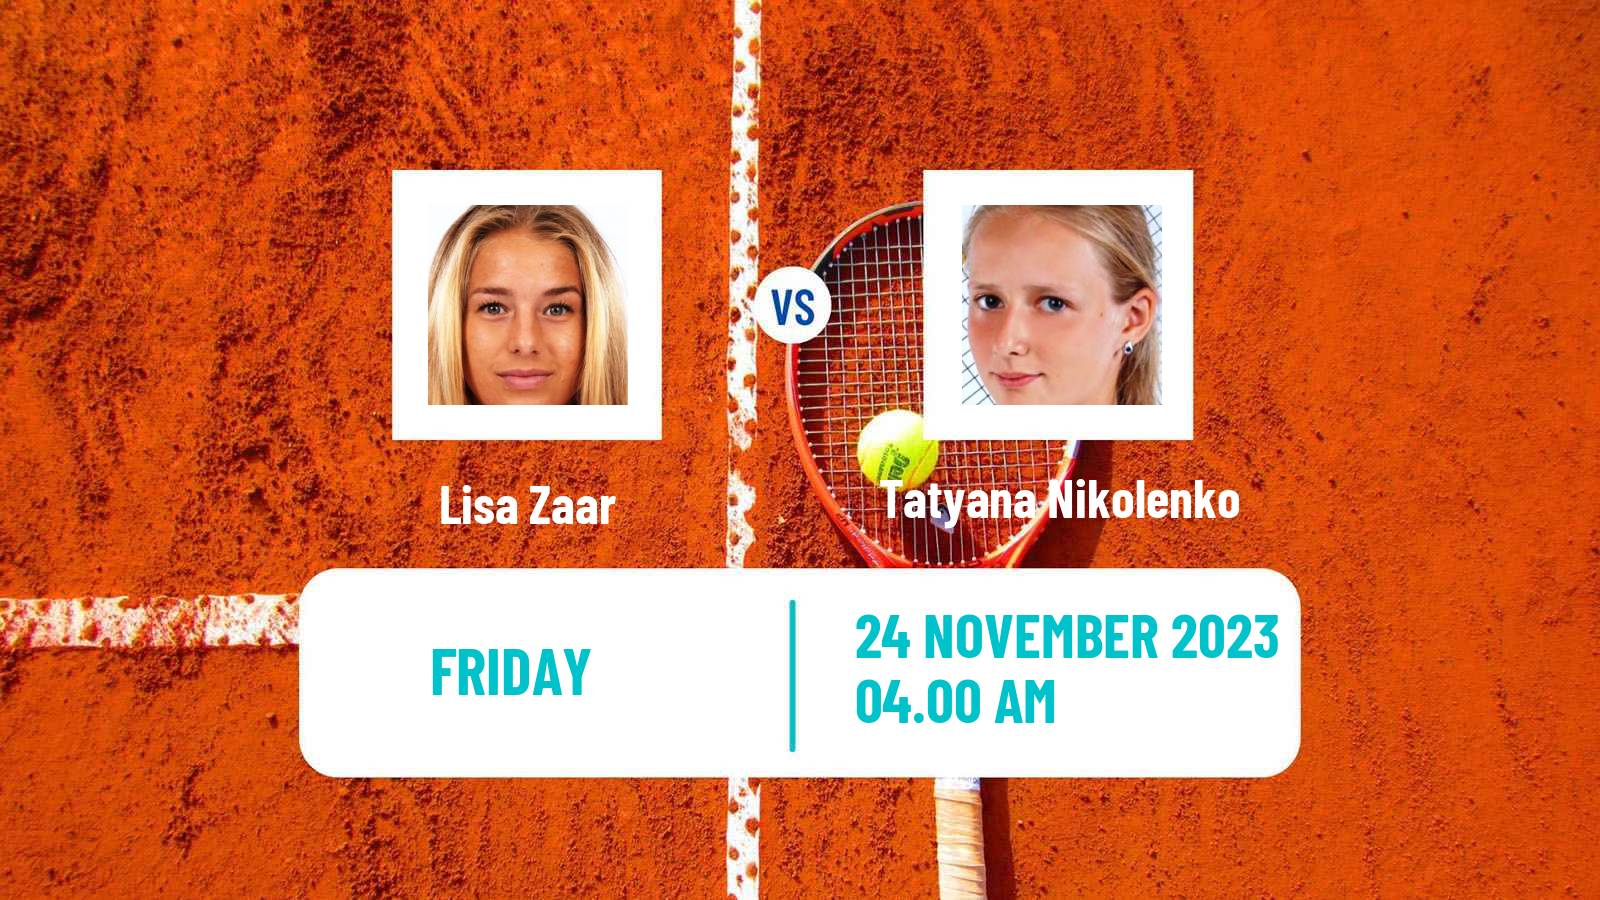 Tennis ITF W15 Antalya 19 Women Lisa Zaar - Tatyana Nikolenko